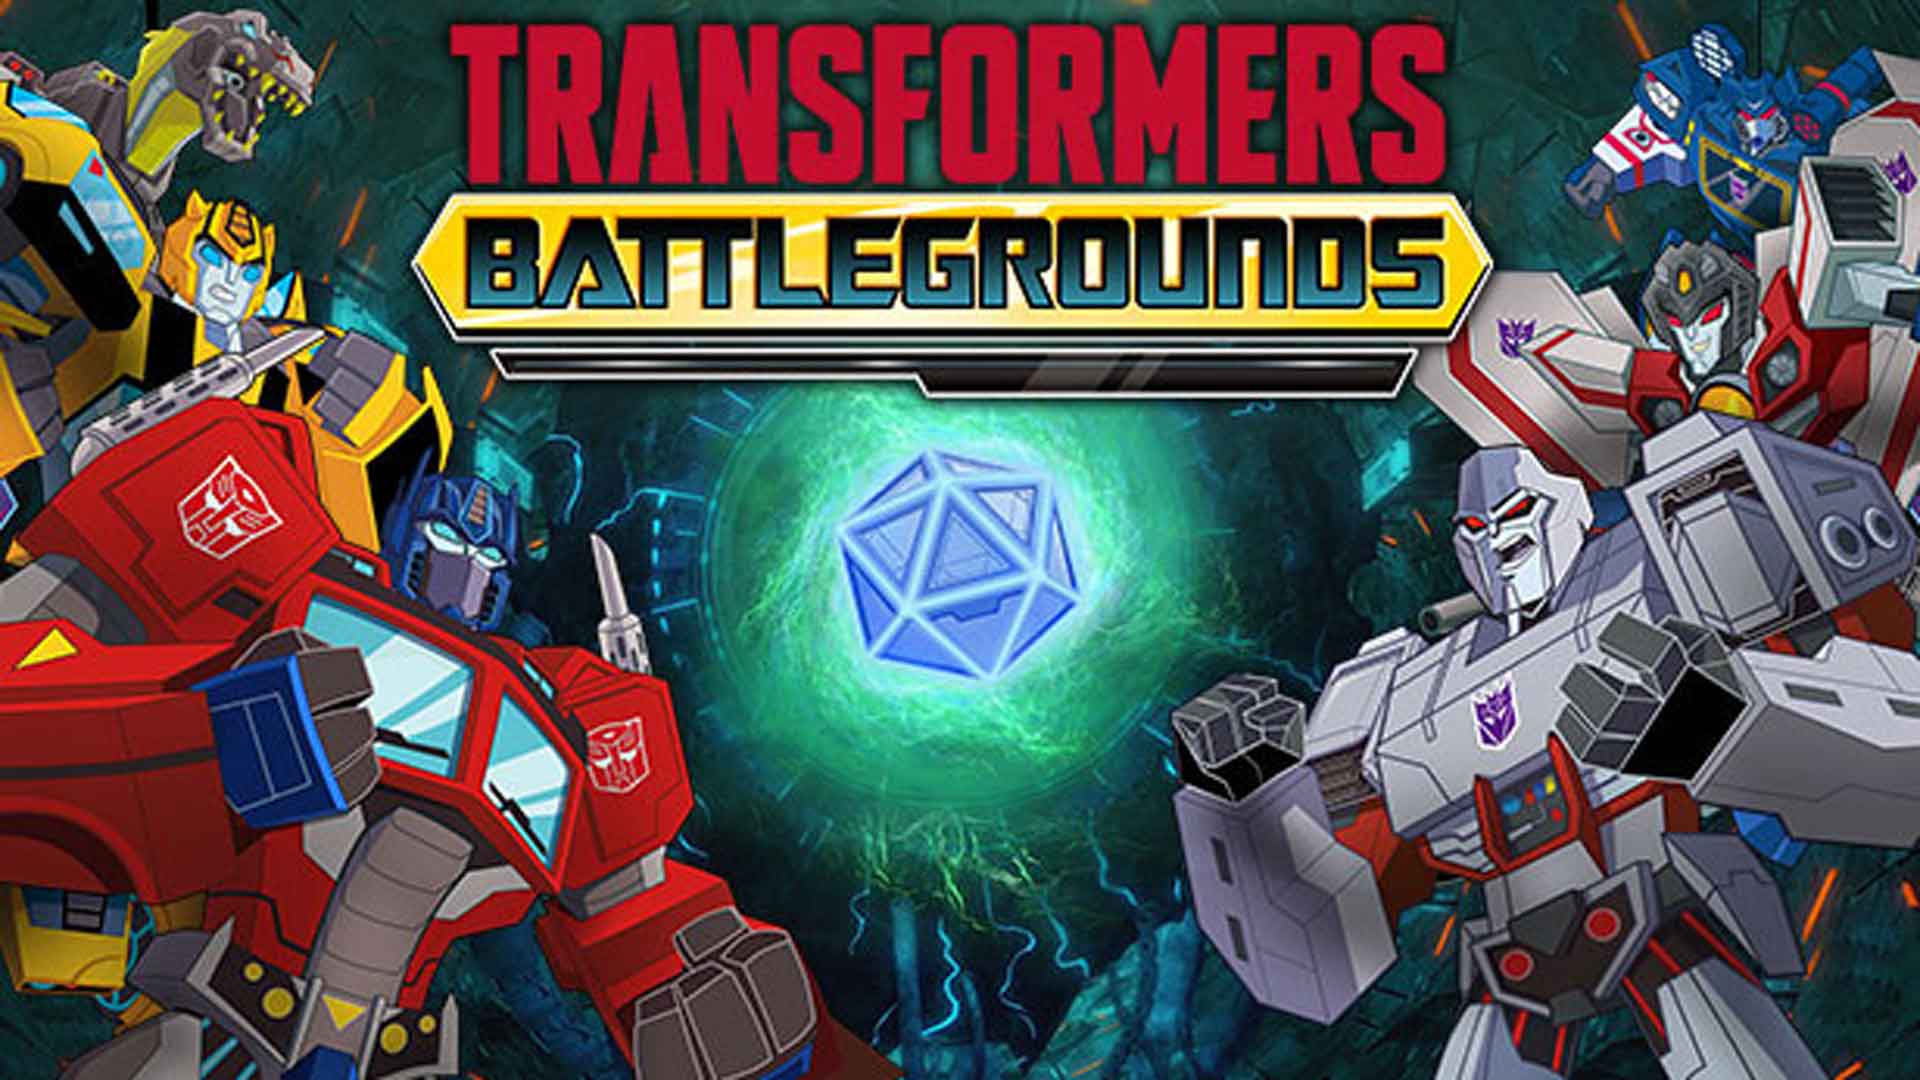 Transformers battlegrounds. Трансформеры Battlegrounds. Transformers Battlegrounds ps4. Игра для Switch Transformers Battlegrounds. Трансформеры роботы под прикрытием Спринглоуд.